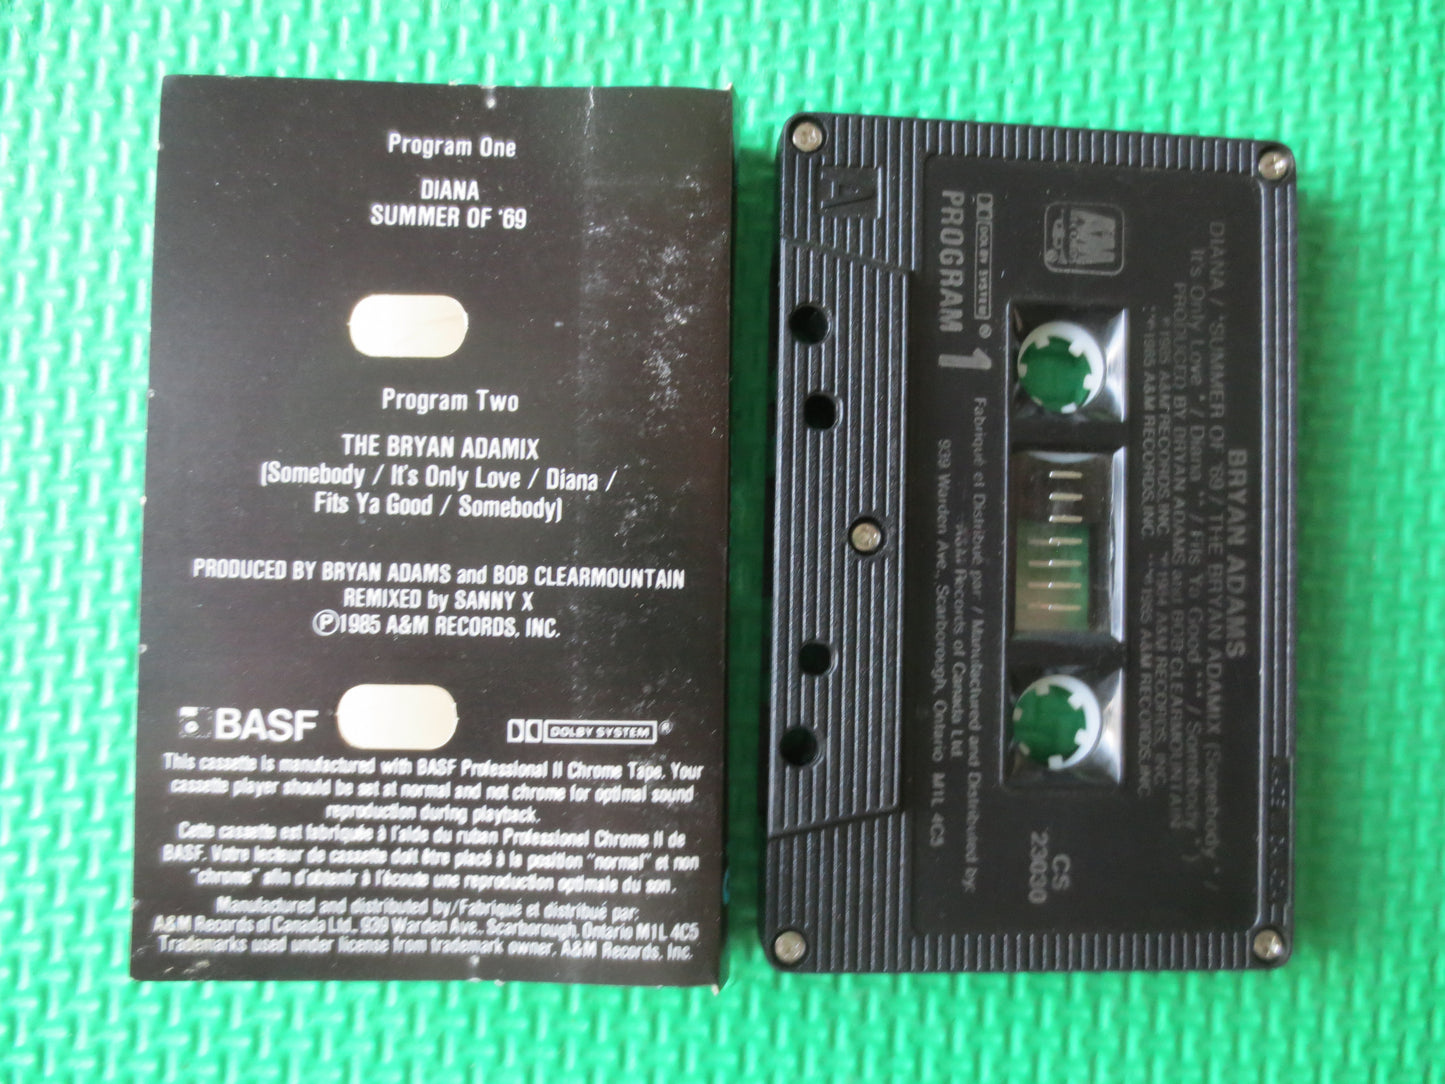 BRYAN ADAMS Tape, DIANA, Bryan Adams Album, Bryan Adams Music, Bryan Adams, Tape Cassette, Music Cassette, 1985 Cassette